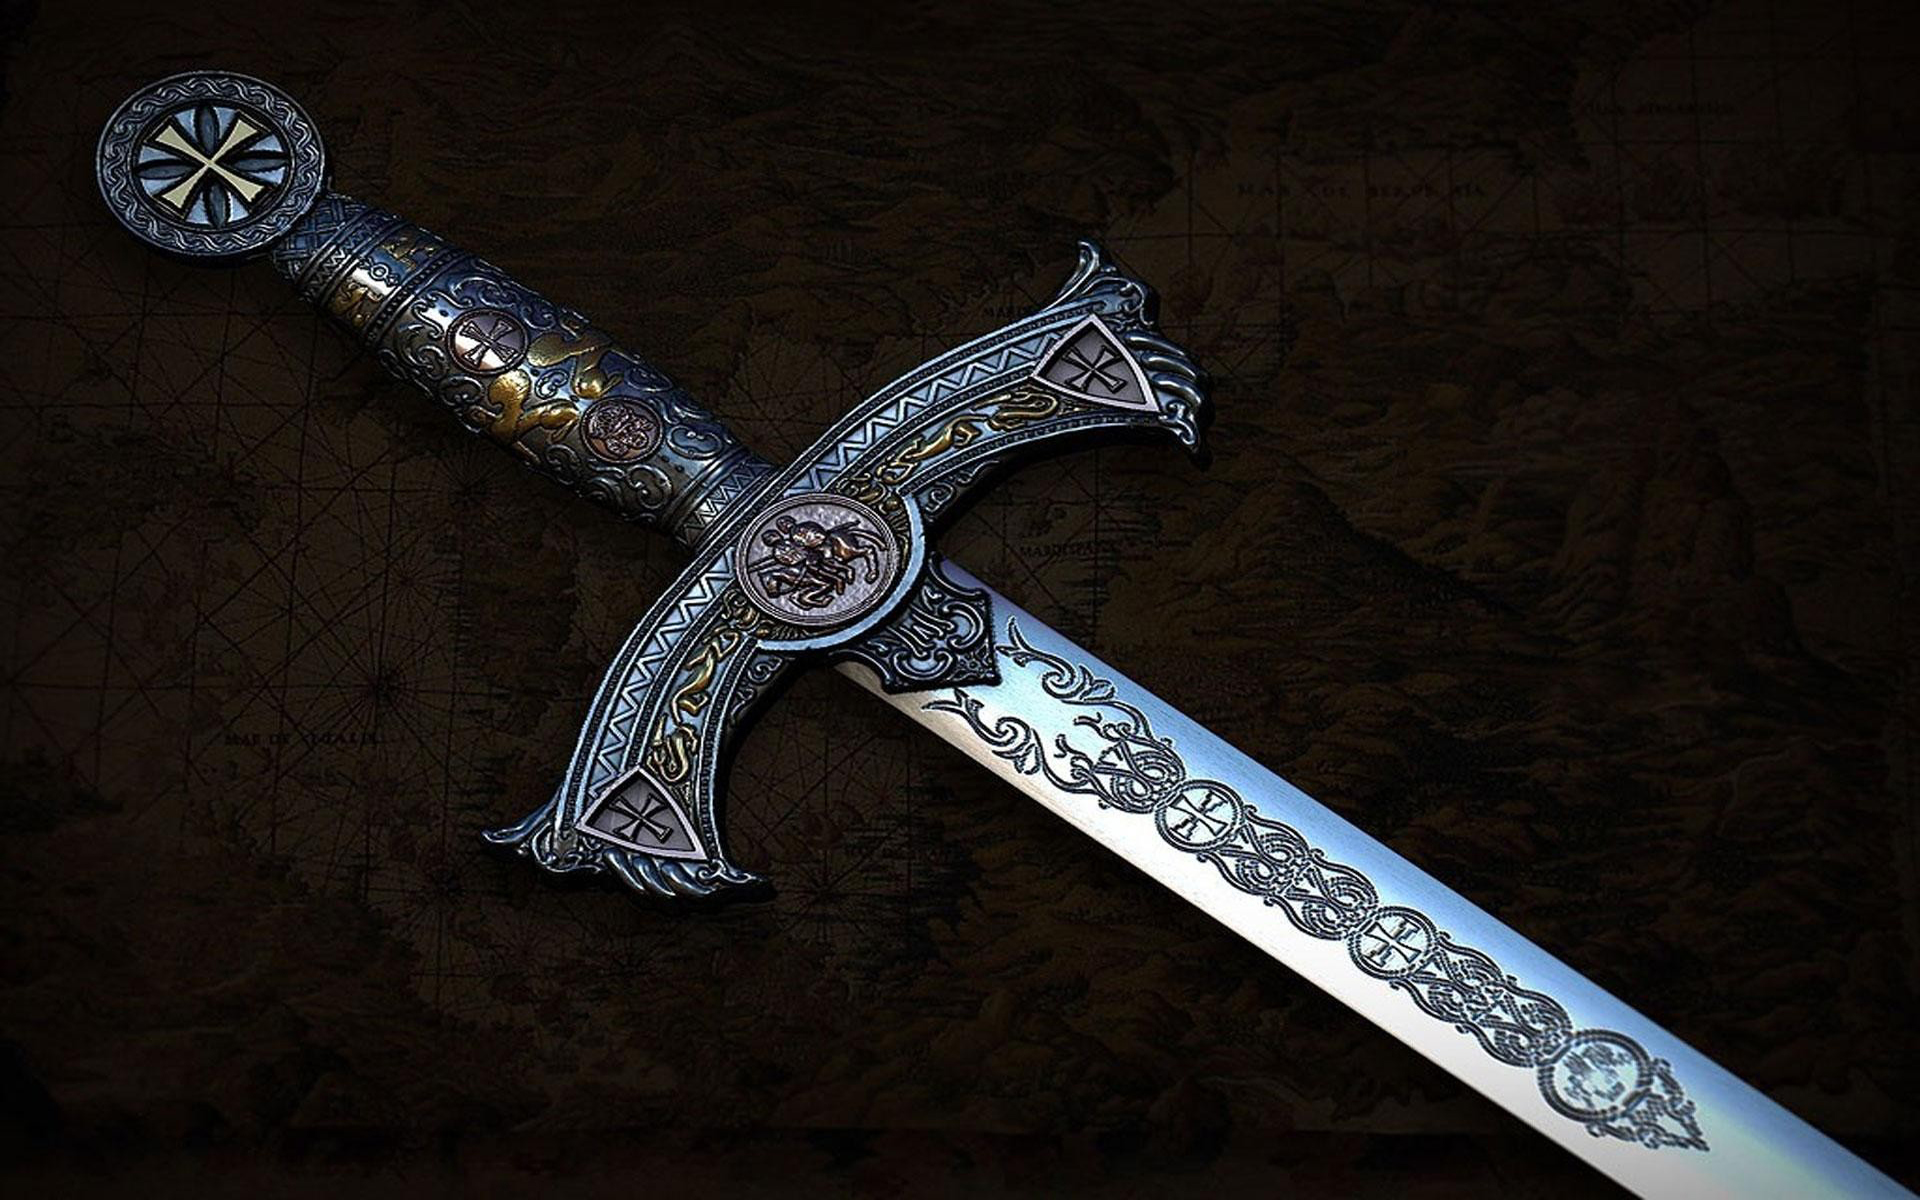 Very Nice Sword